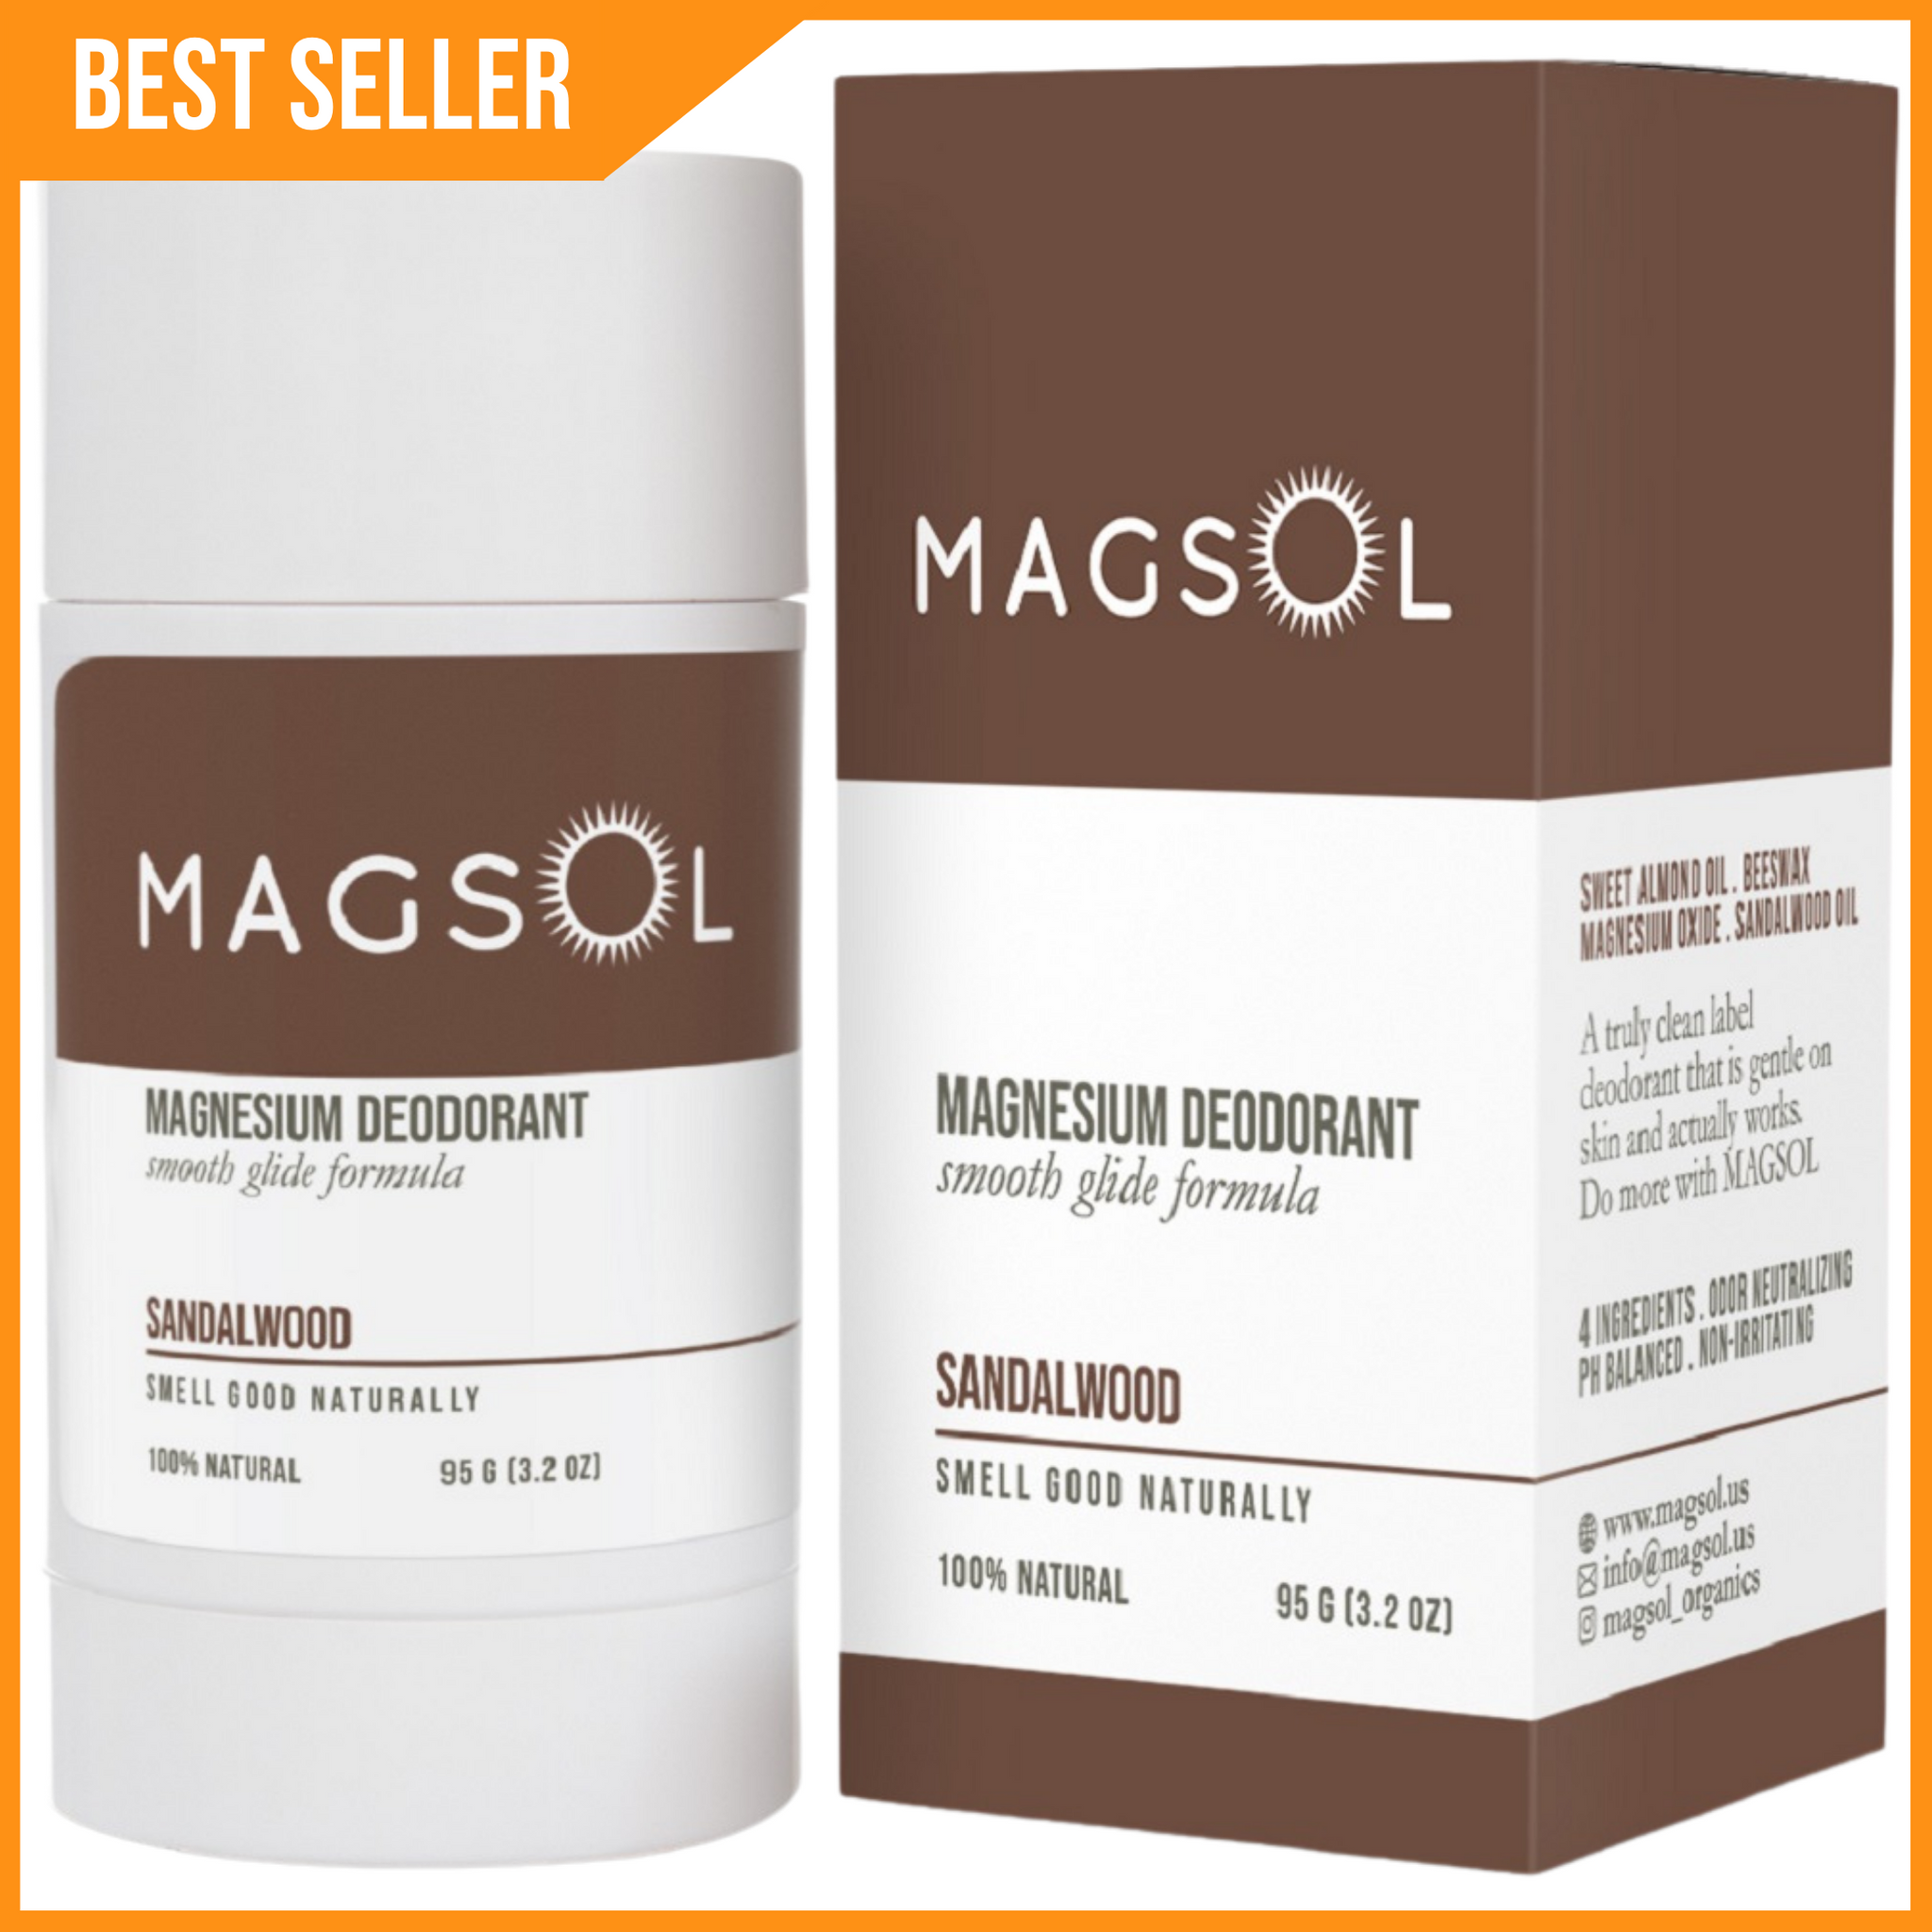 MAGSOL Magnesium Deodorant - Sandalwood